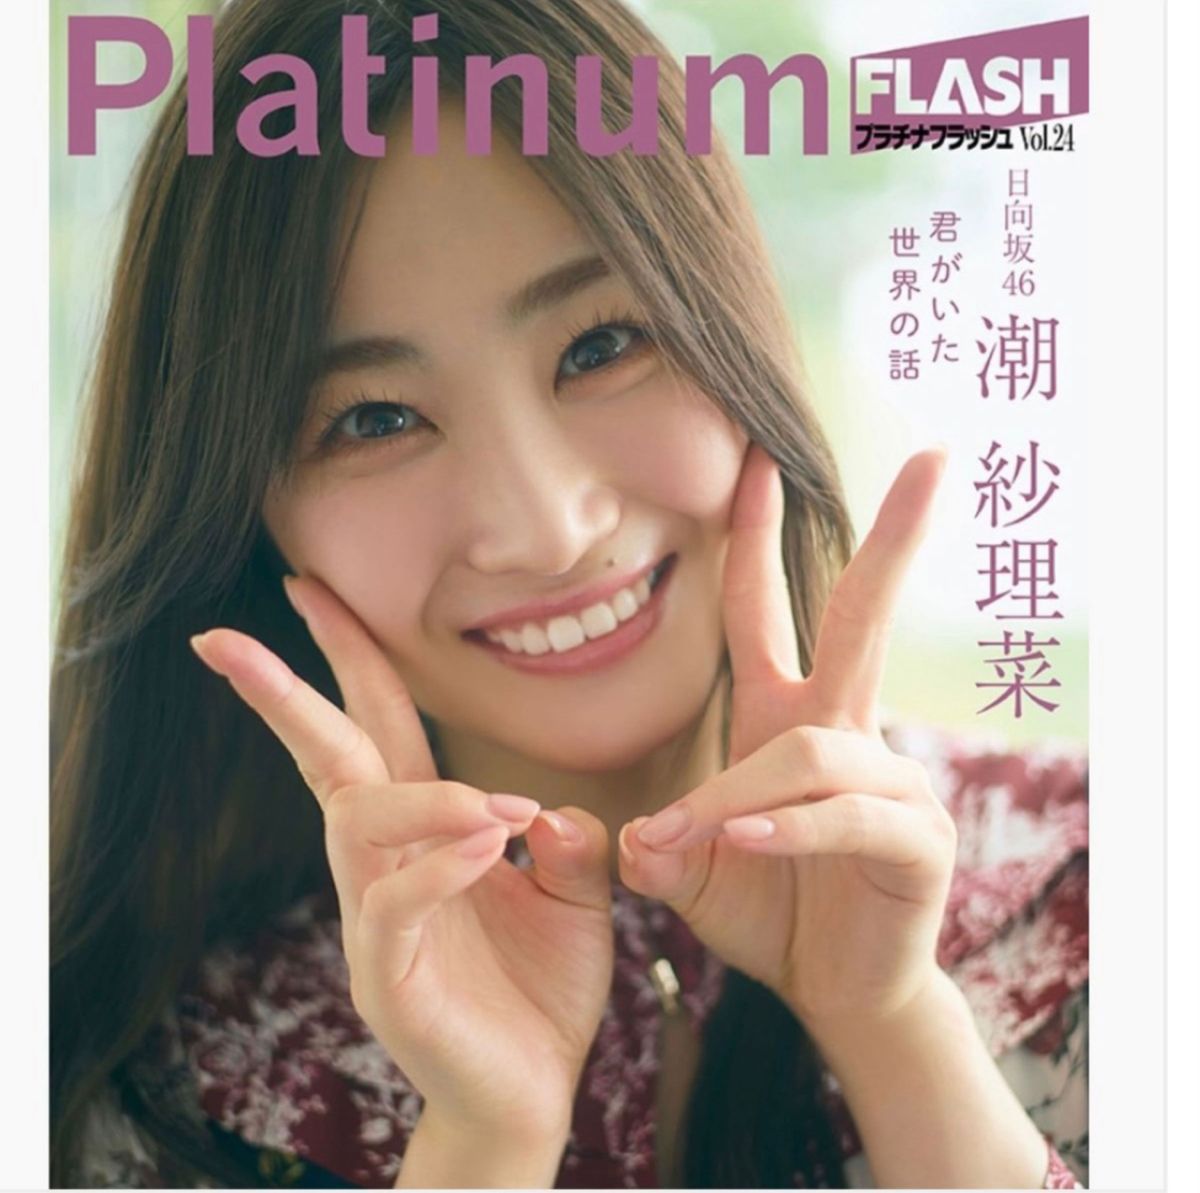 Platinum FLASH Vol.24 小坂菜緒　潮紗理菜　応募券とクリアファイル無し